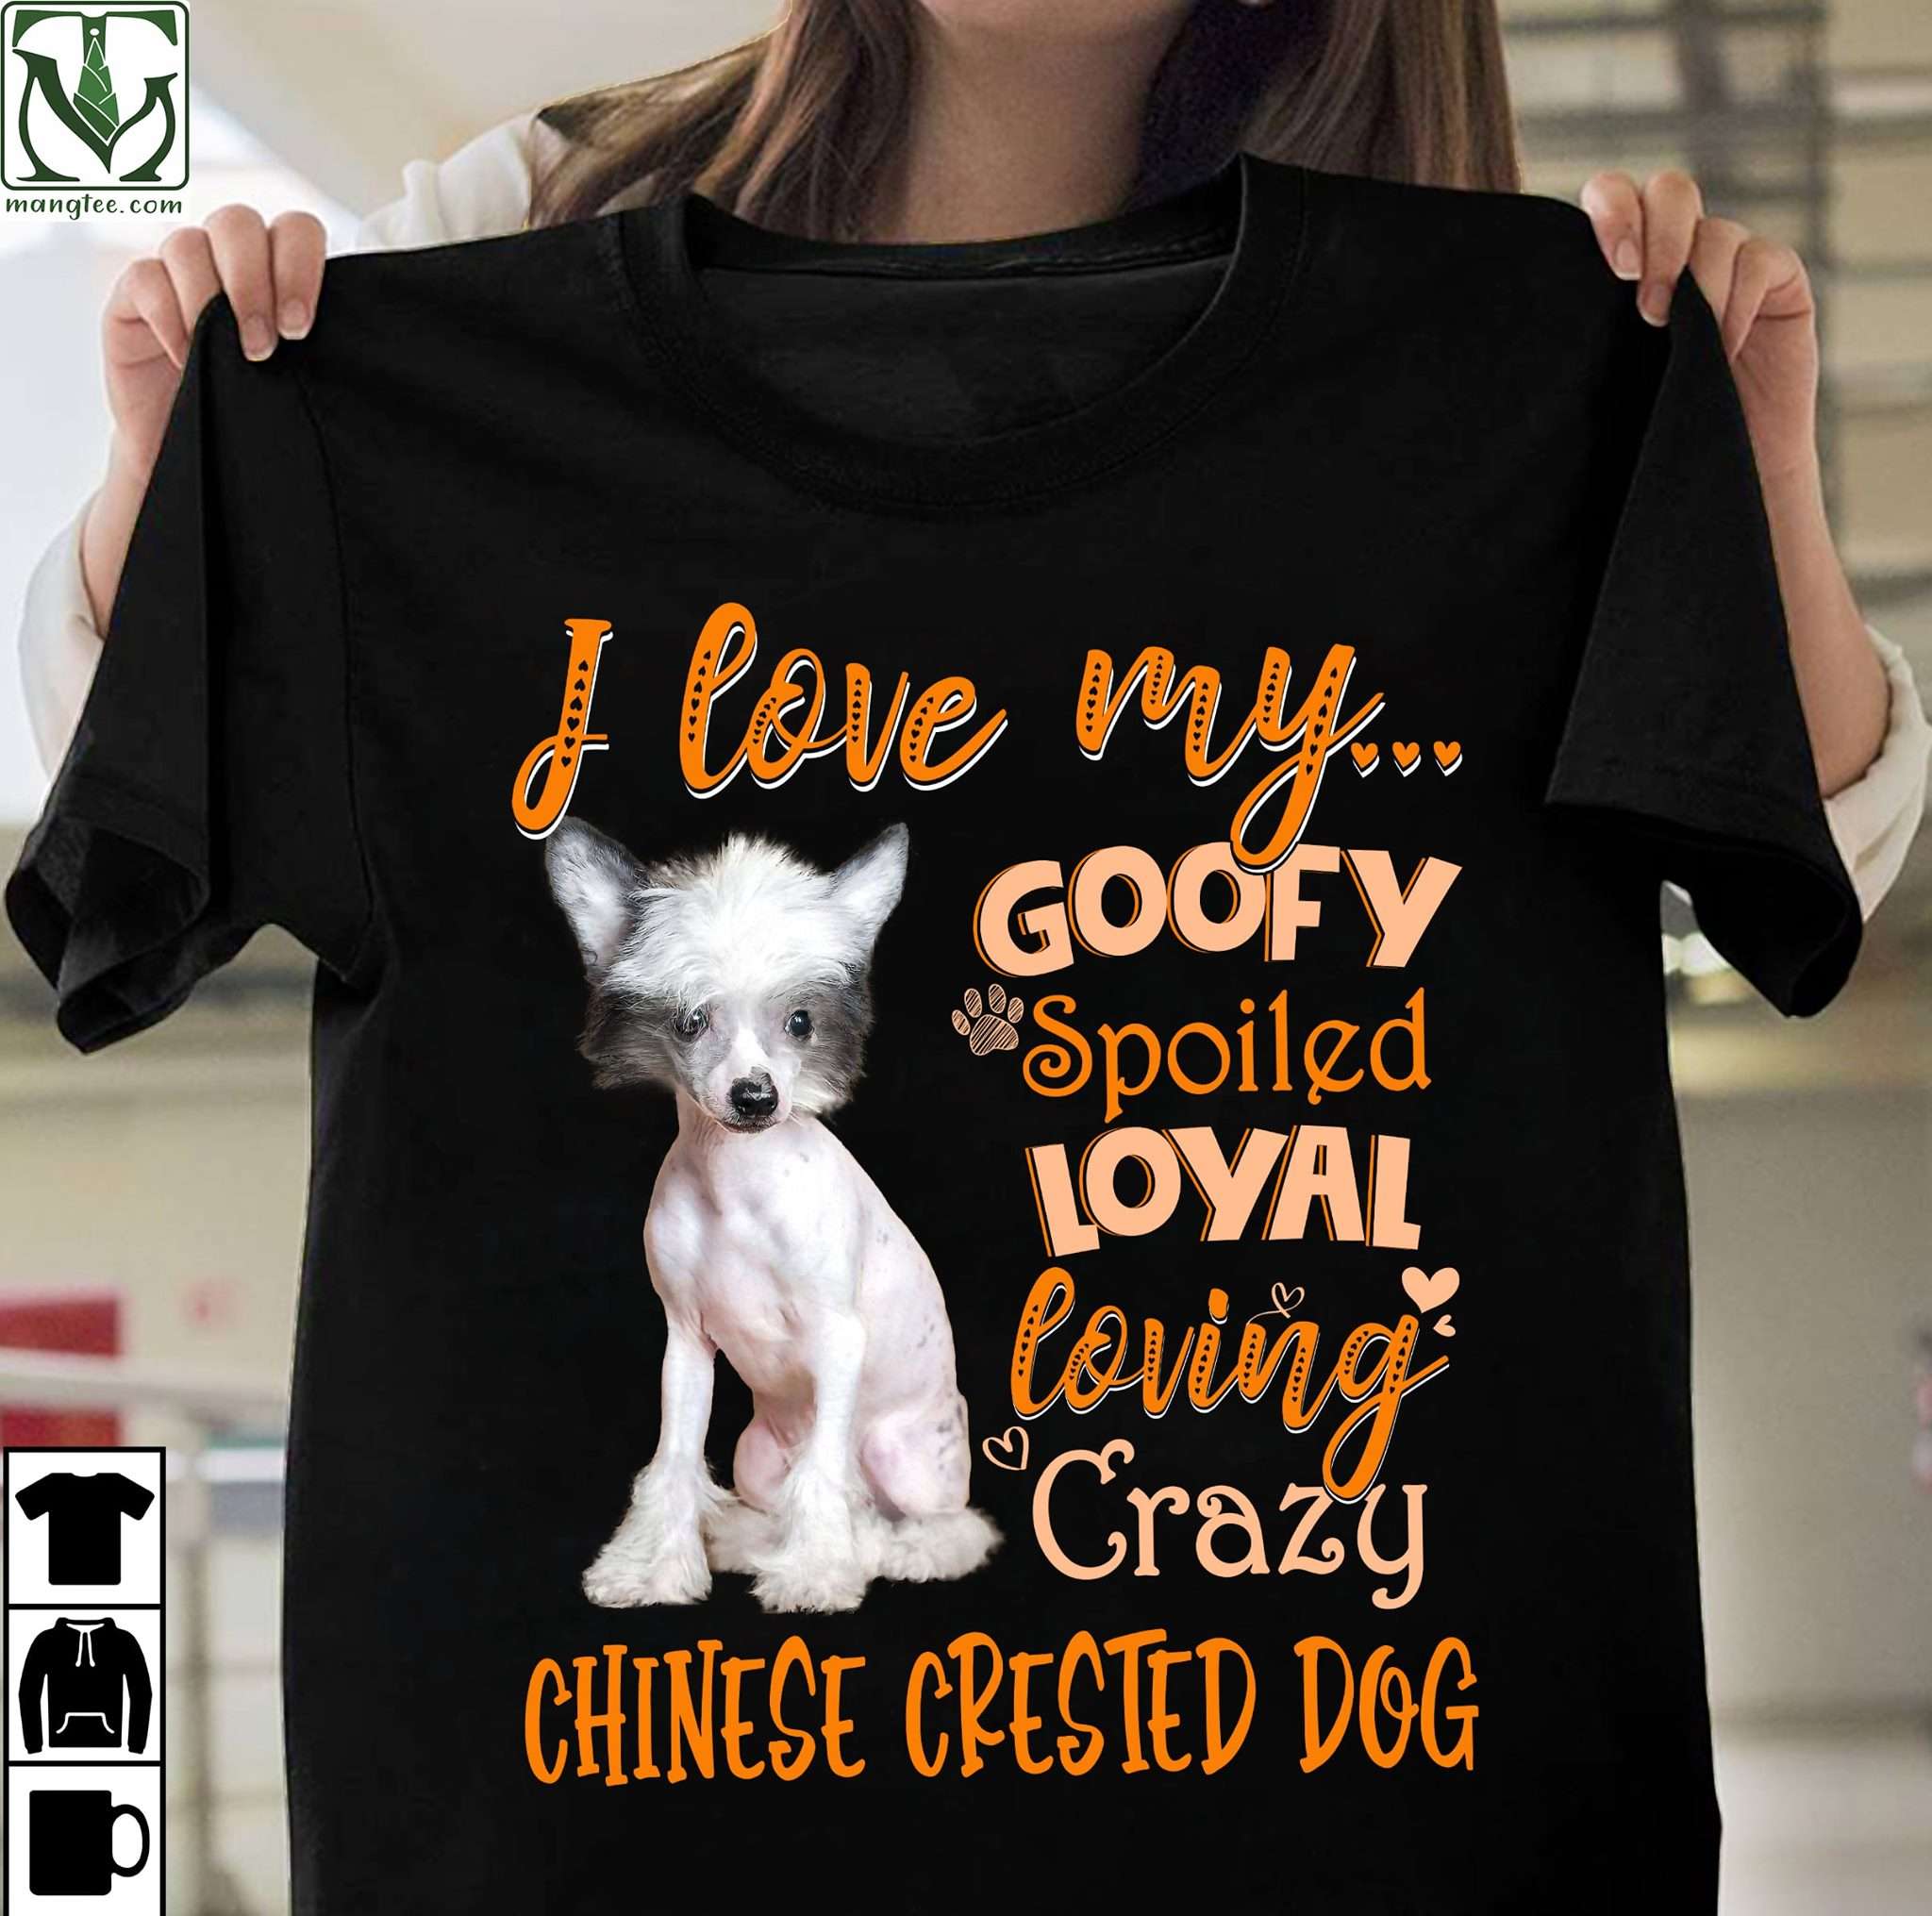 I love my goofy spoiled loyal loving crazy Chinese crested dog - Dog the loyal animal